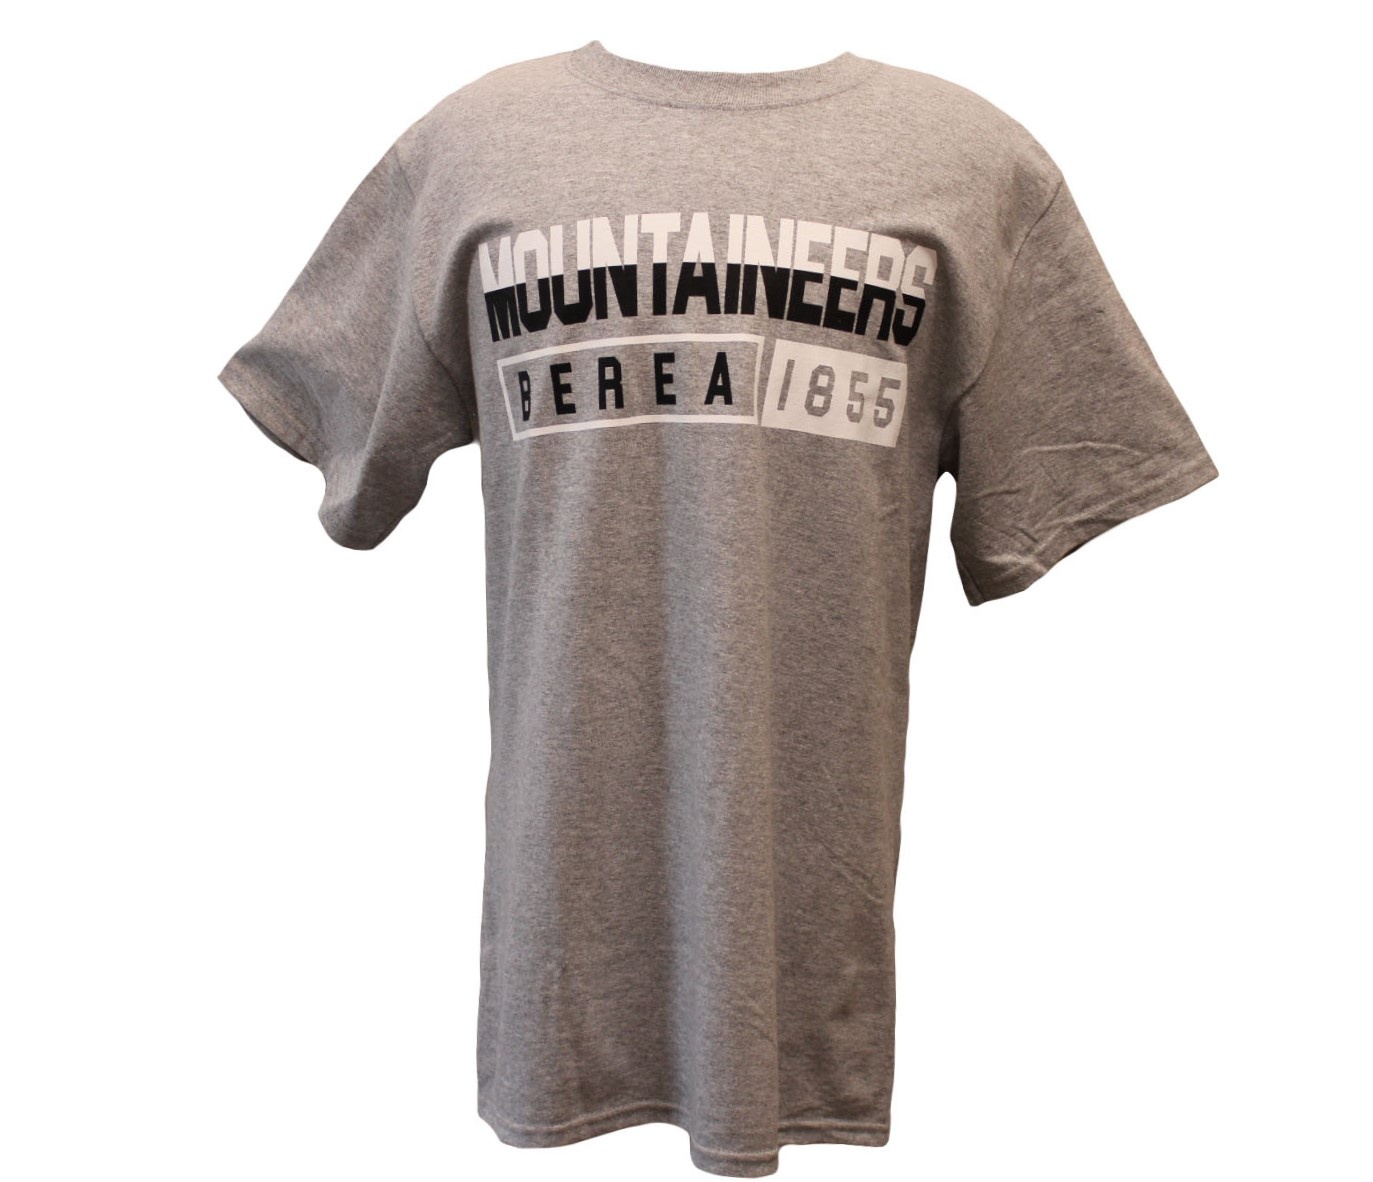 Mountaineers Berea 1855 T-shirt-2